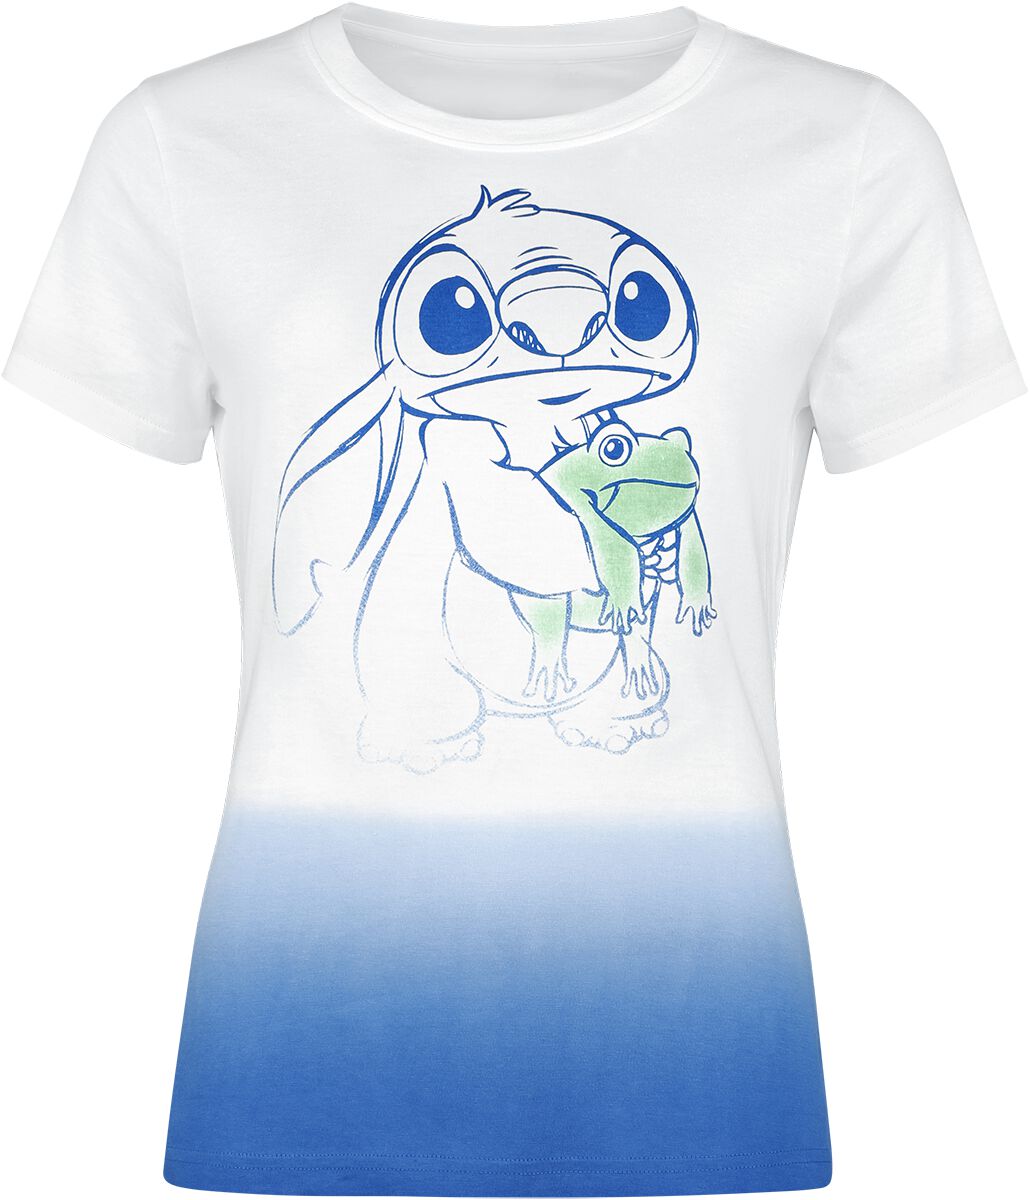 Lilo & Stitch - Disney T-Shirt - Frog friend - S to XXL - for Women - multicolour product